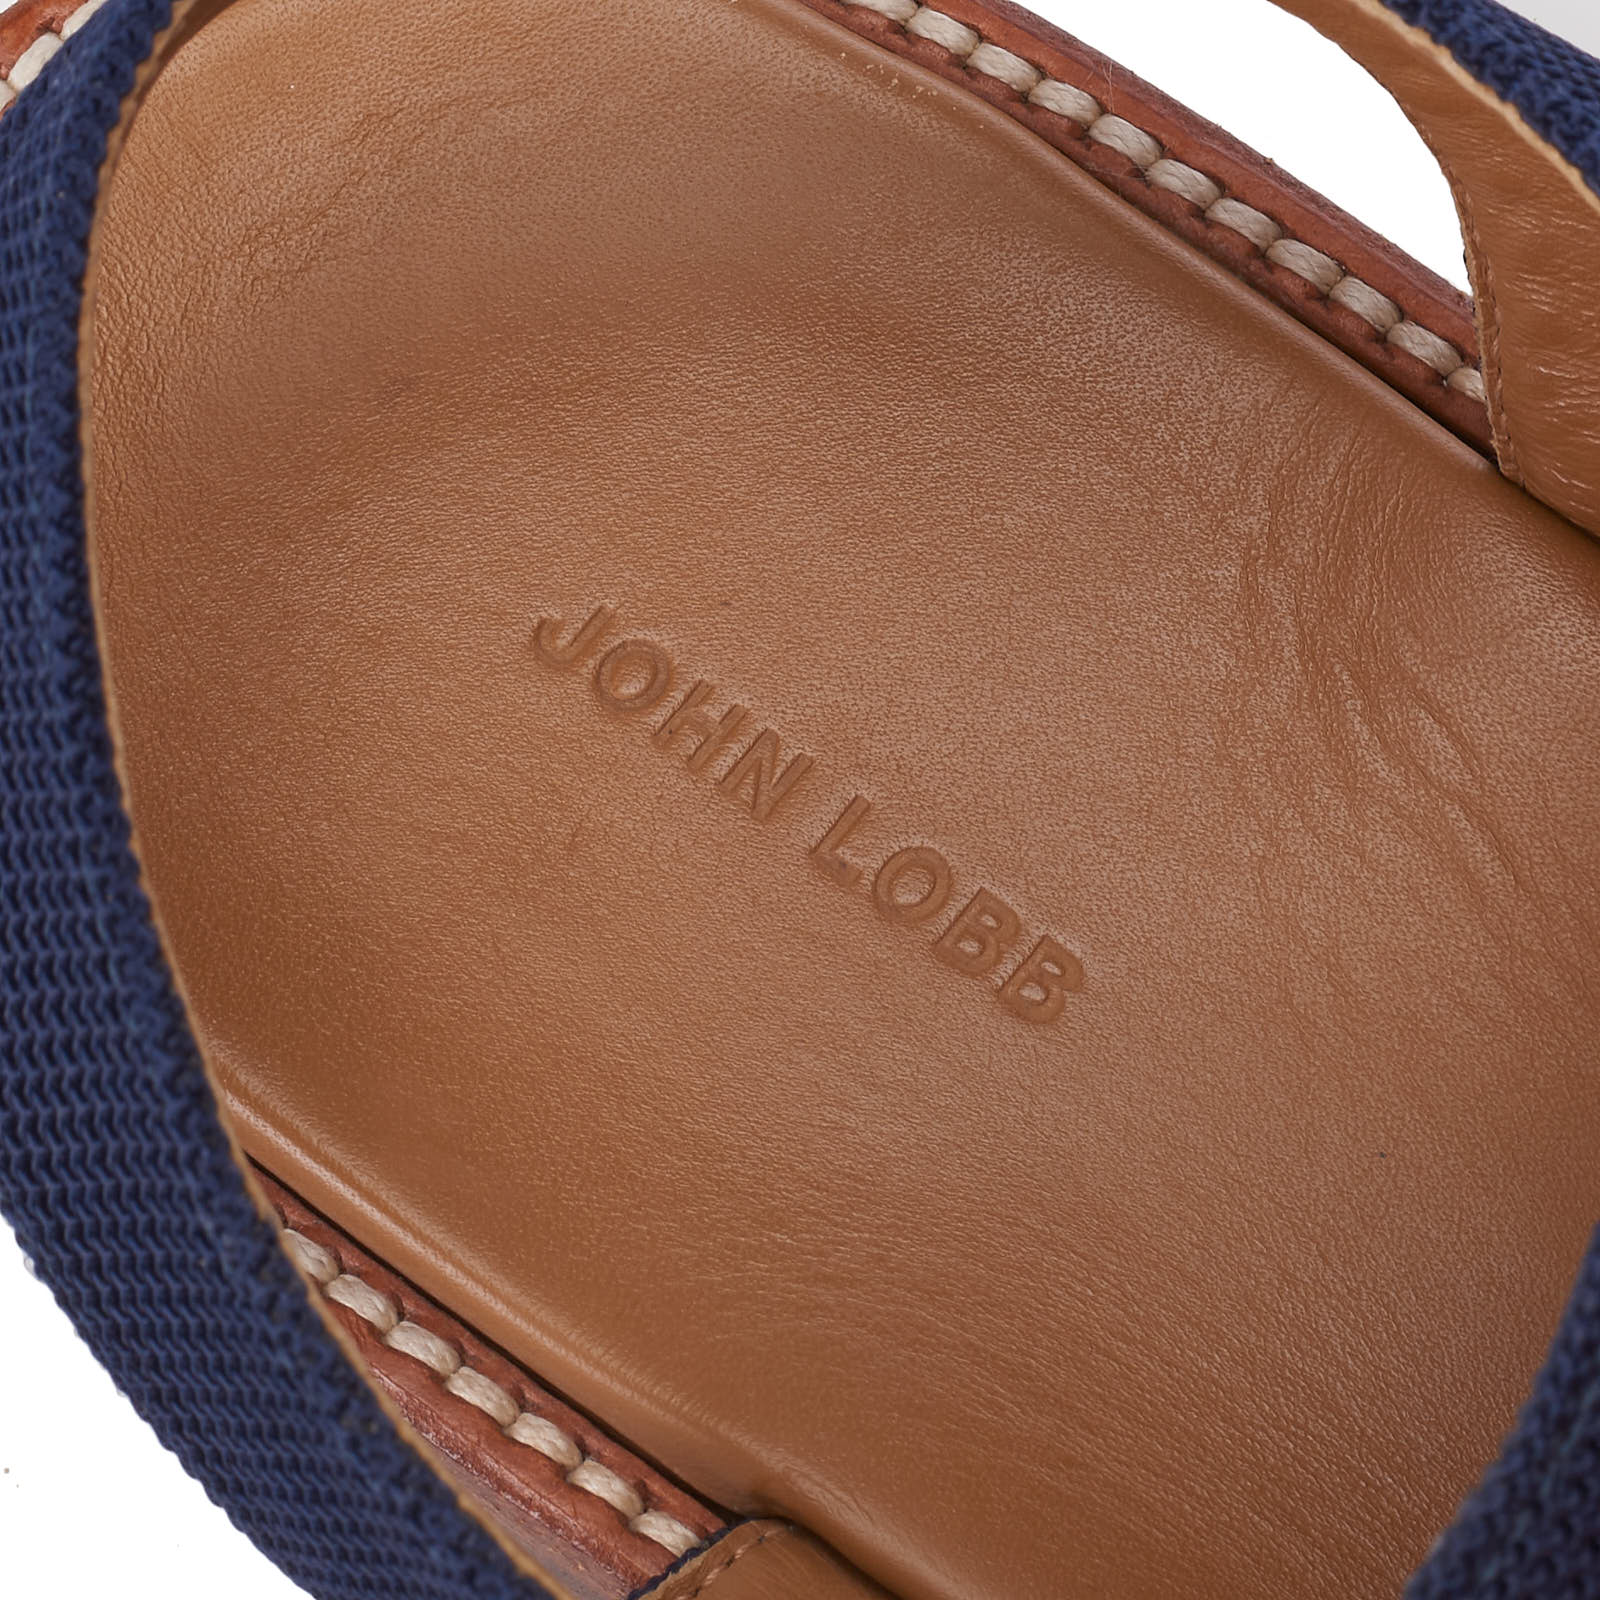 JOHN LOBB "Stratton" Blue Suede Leather Sandal Shoes 8.5E US 9 Last 1712